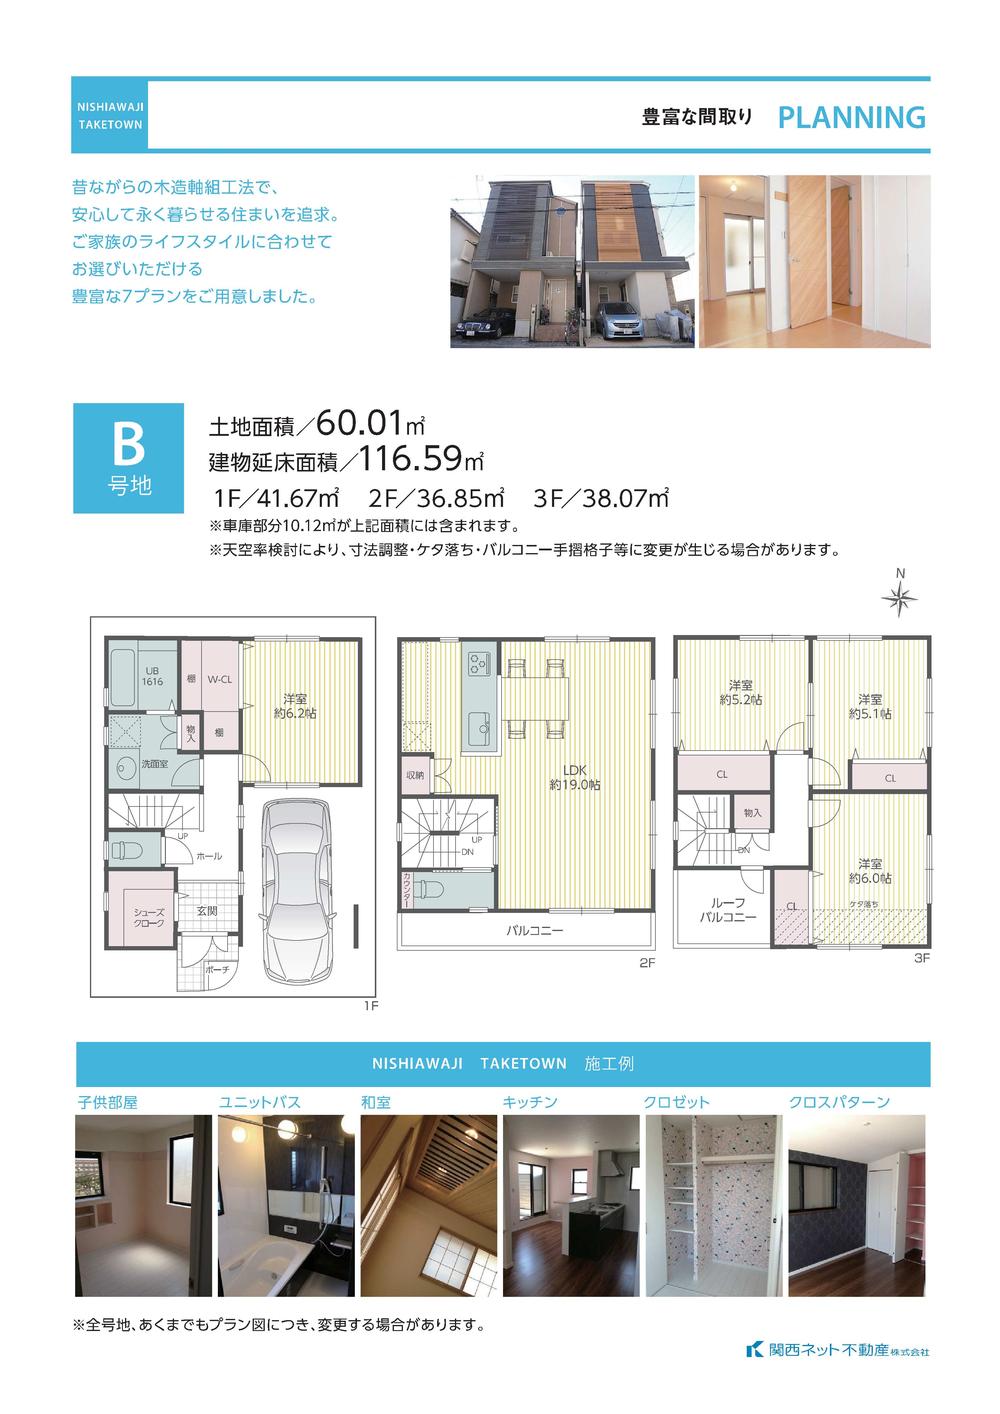 Floor plan. 29,300,000 yen, 4LDK, Land area 60.01 sq m , Building area 116.59 sq m